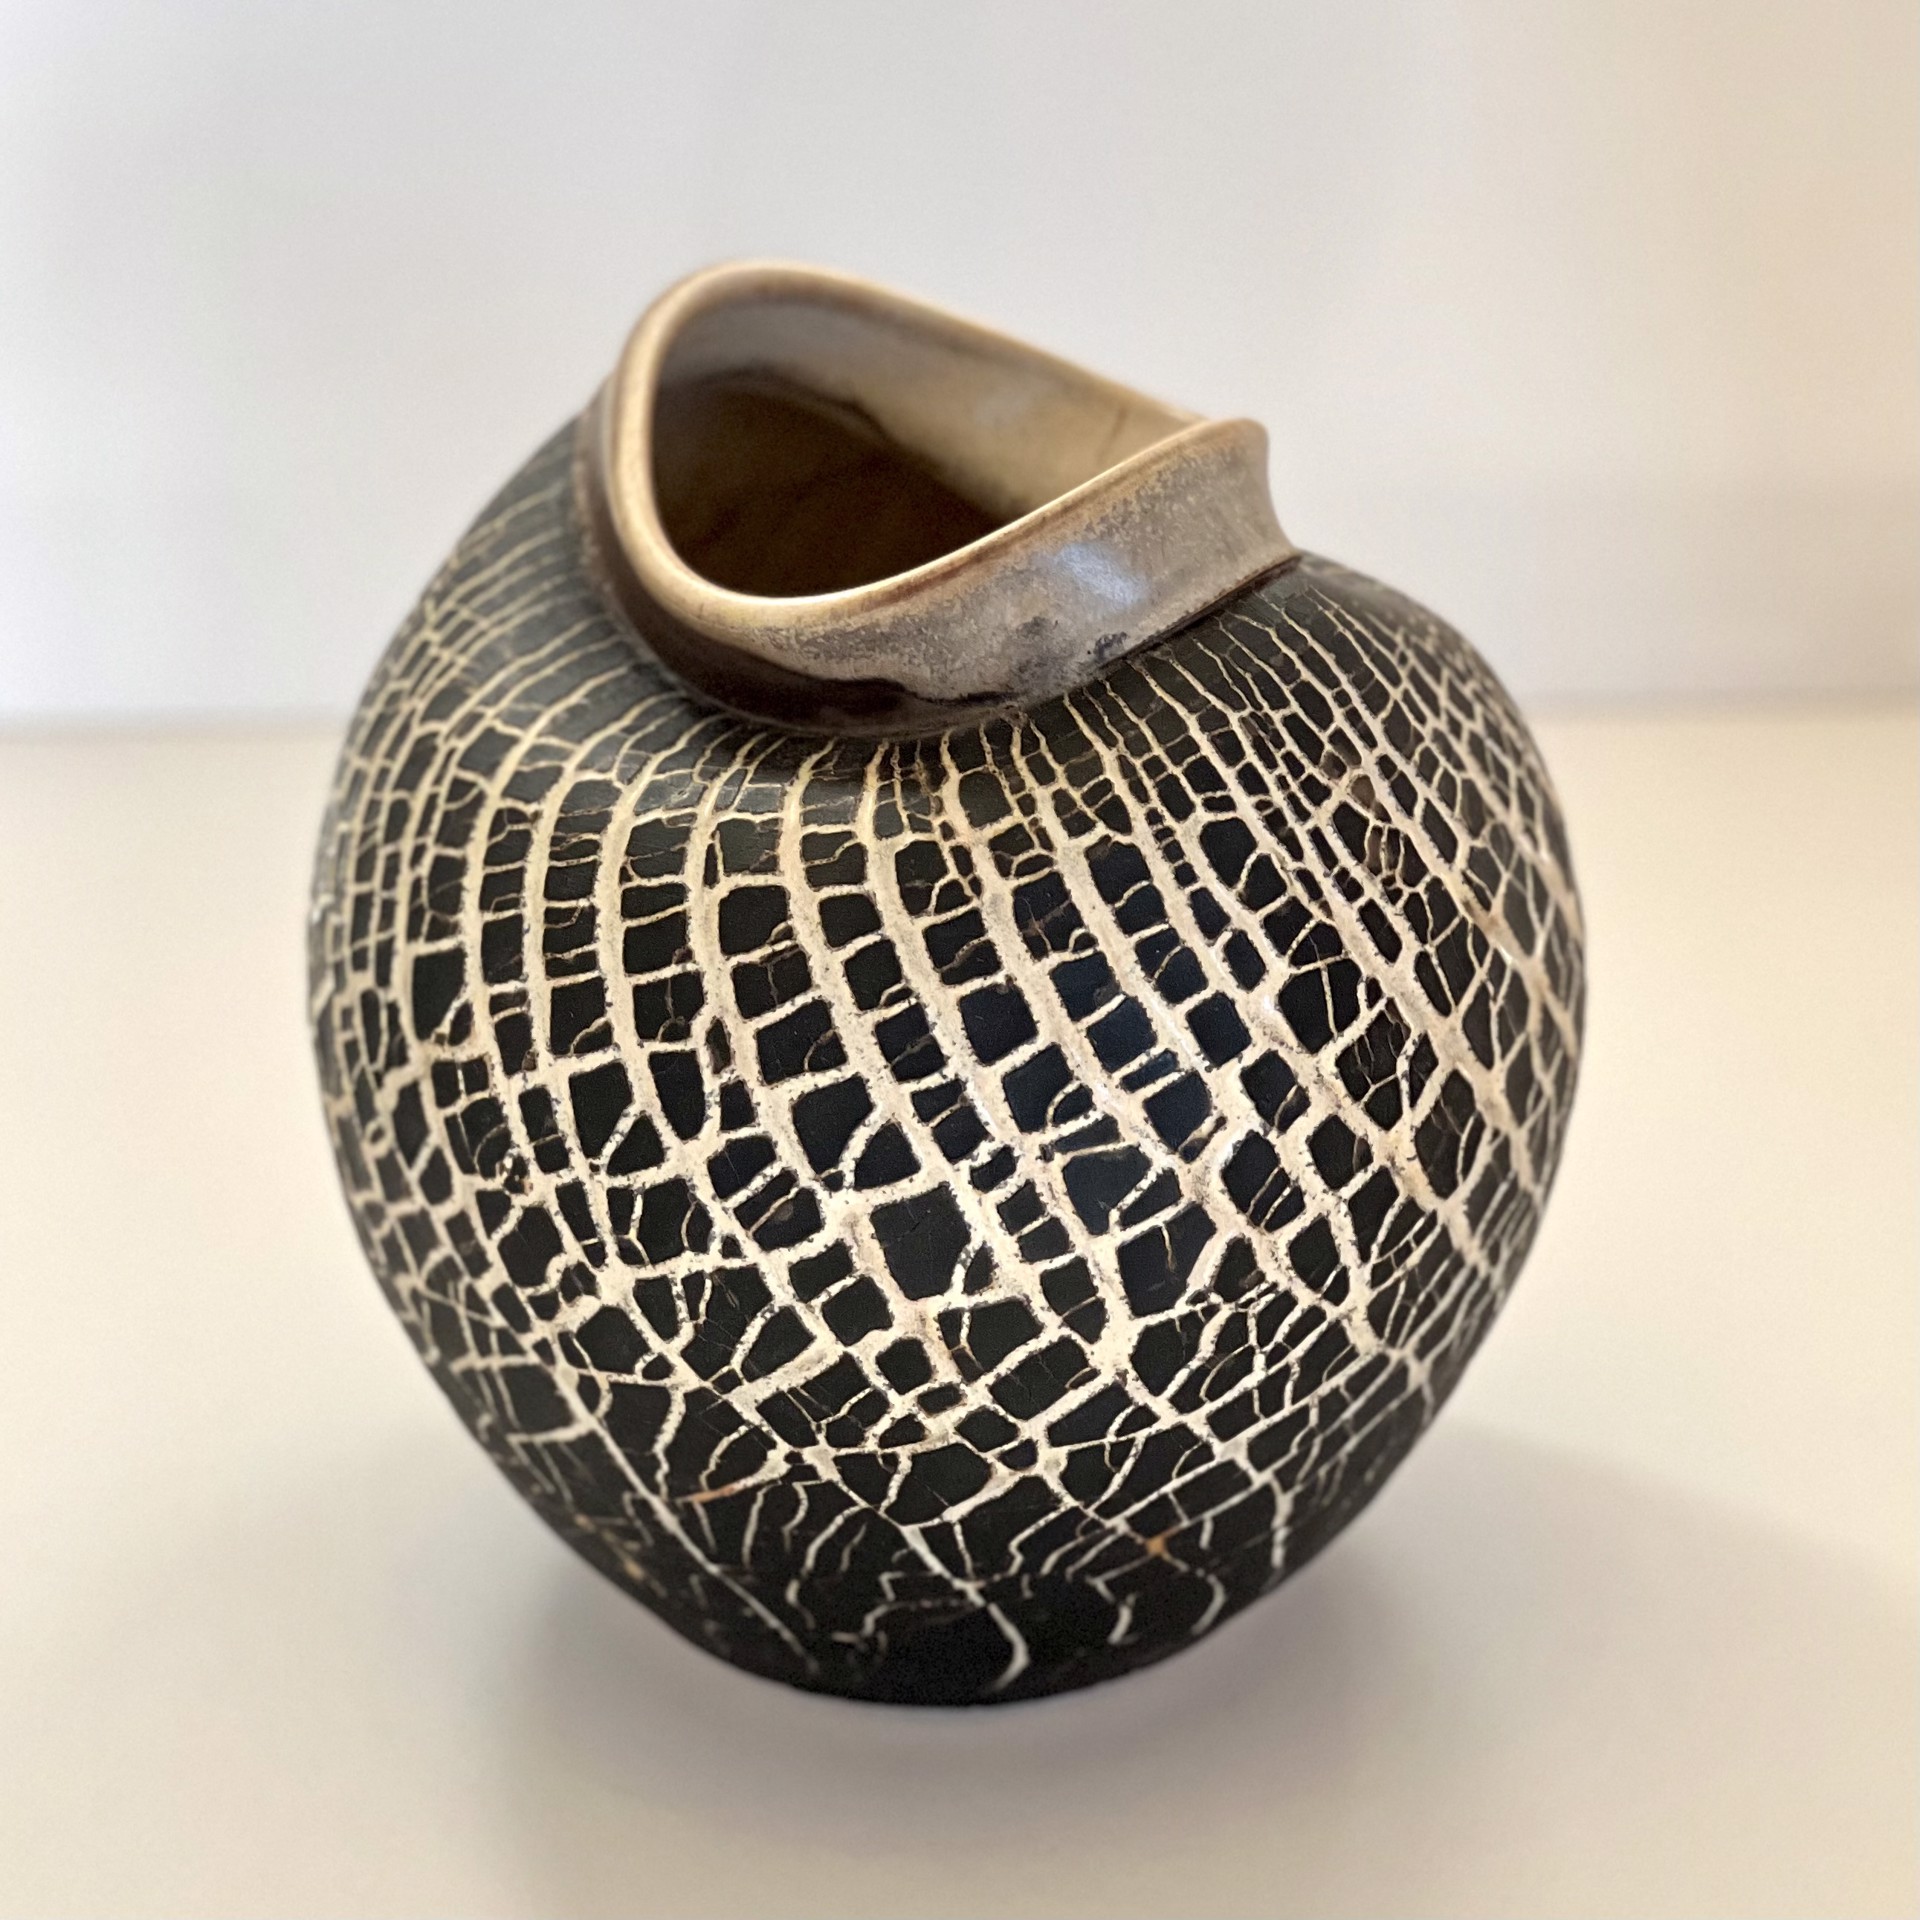 Vase 7 by David LaLomia